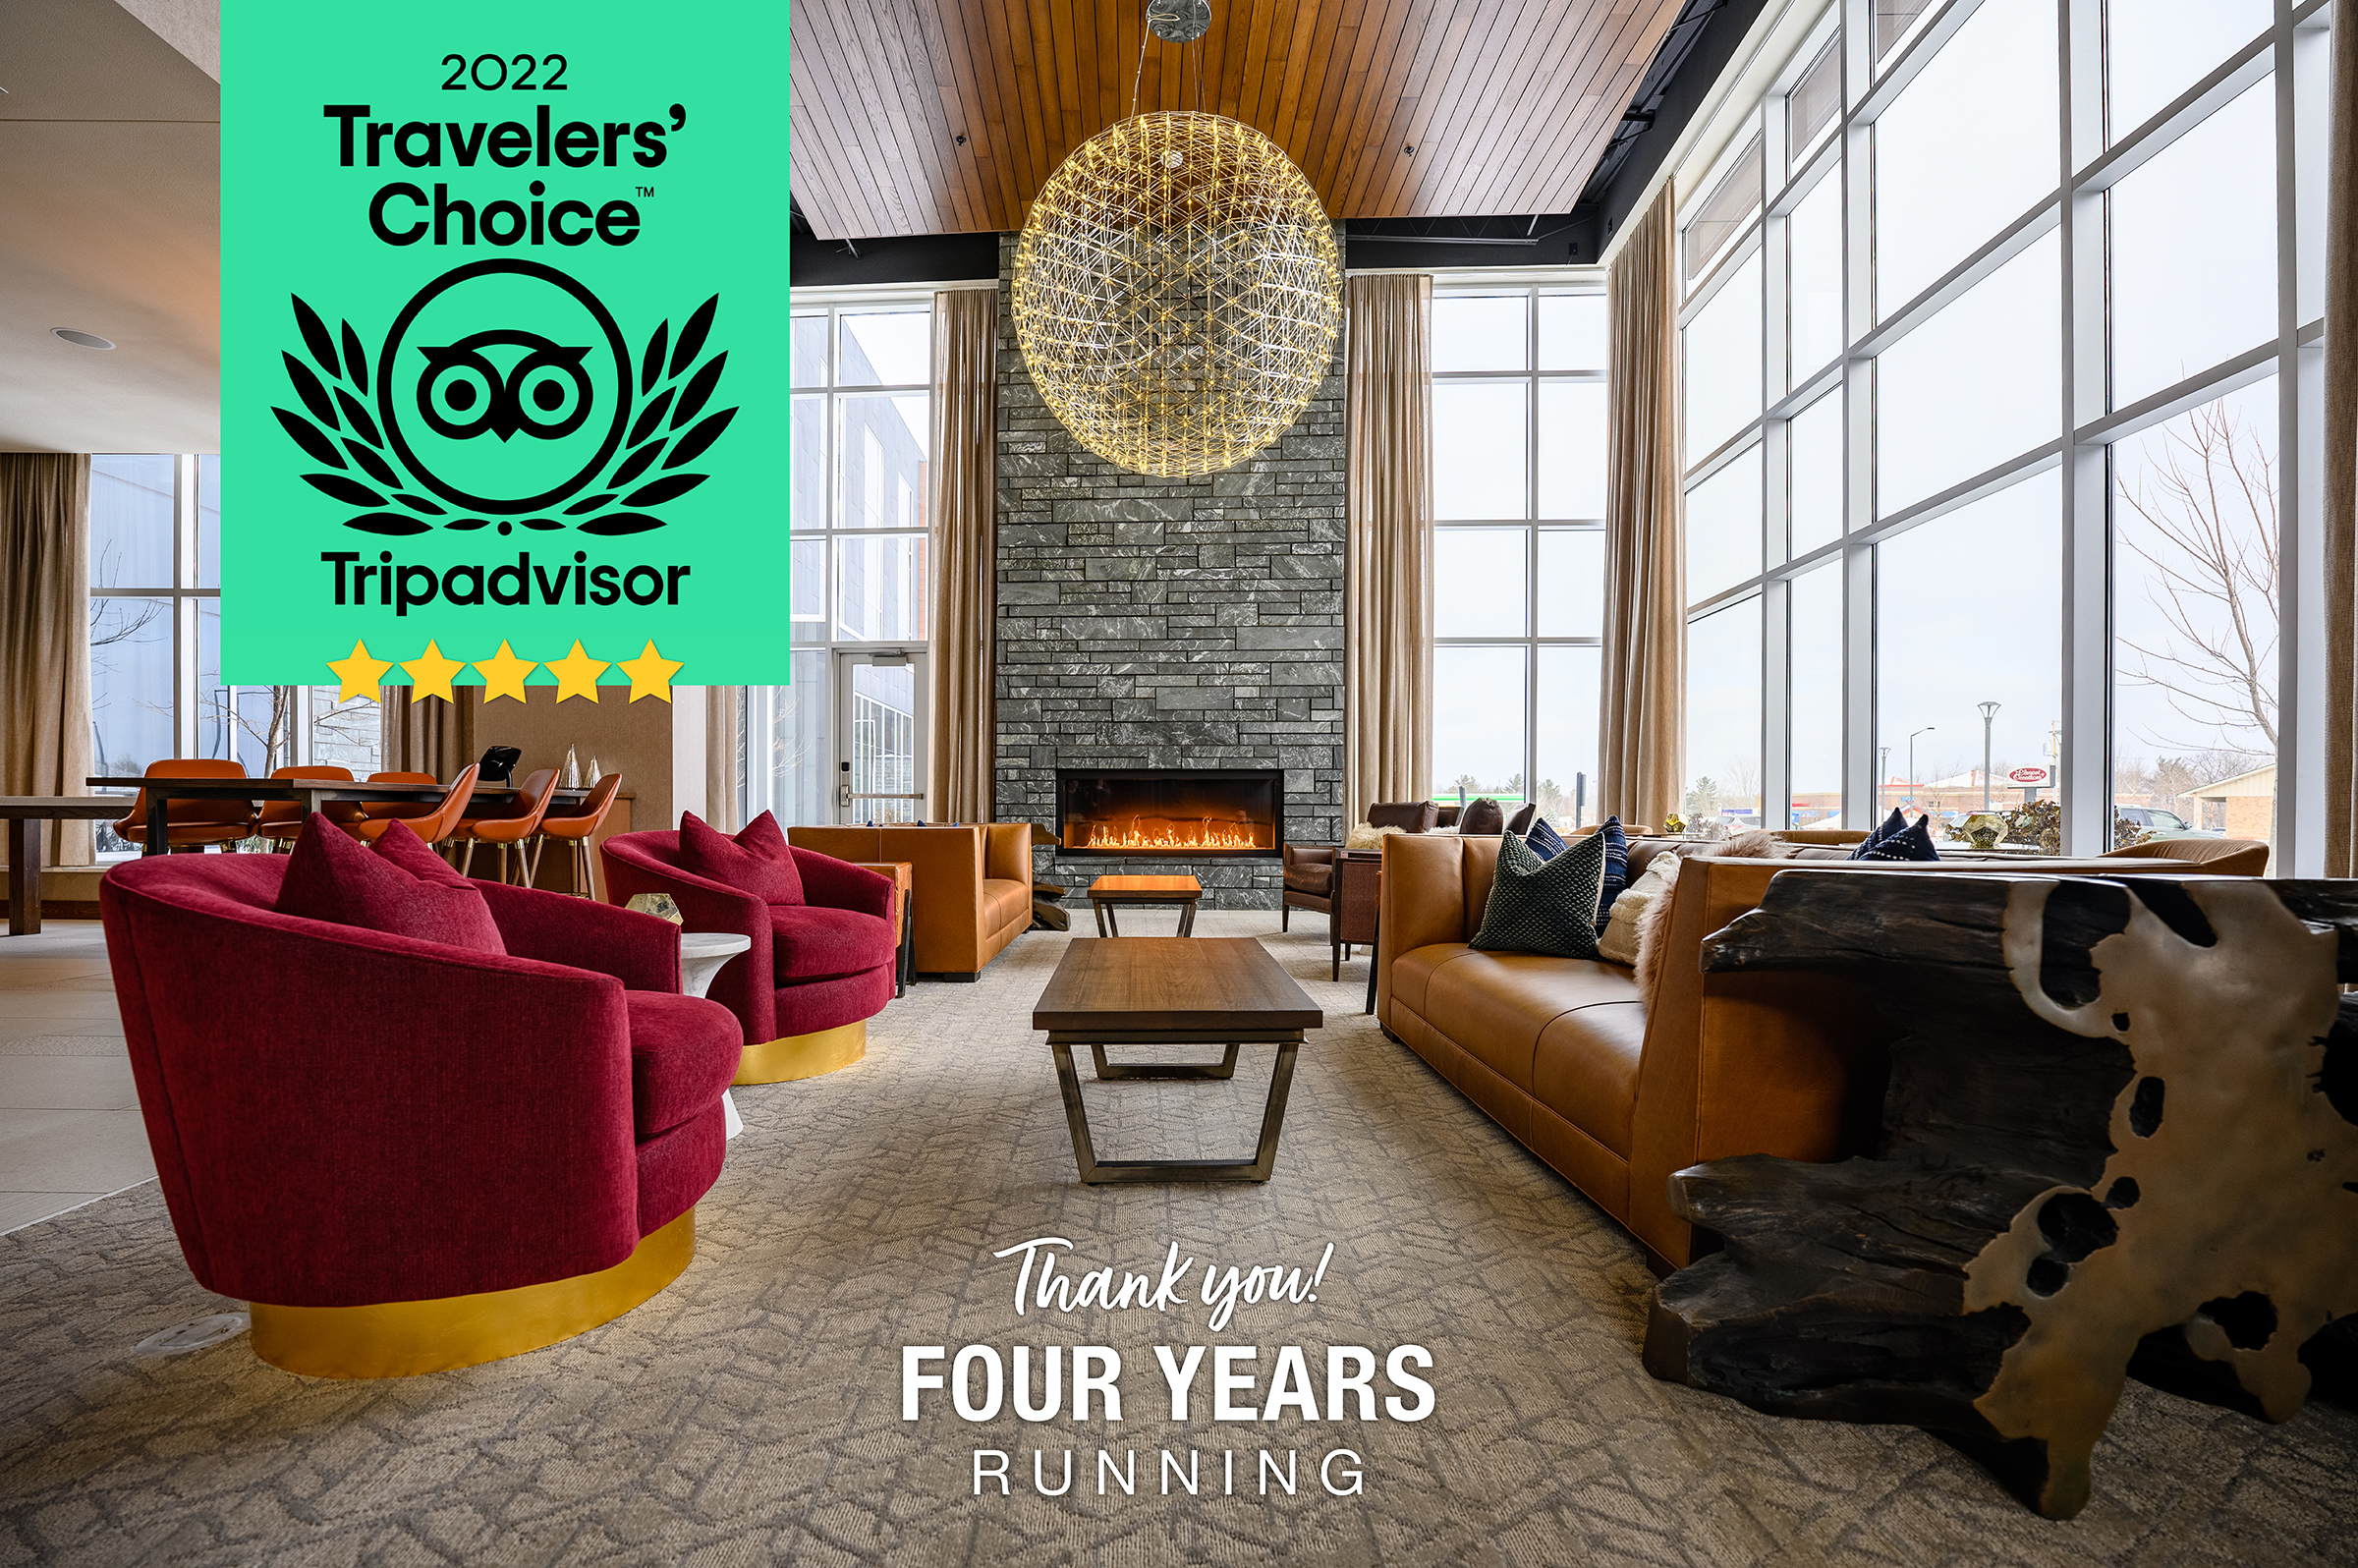 Hilton Garden Inn Wausau Wins Tripadvisor Travelers’ Choice Award  Four Years Running